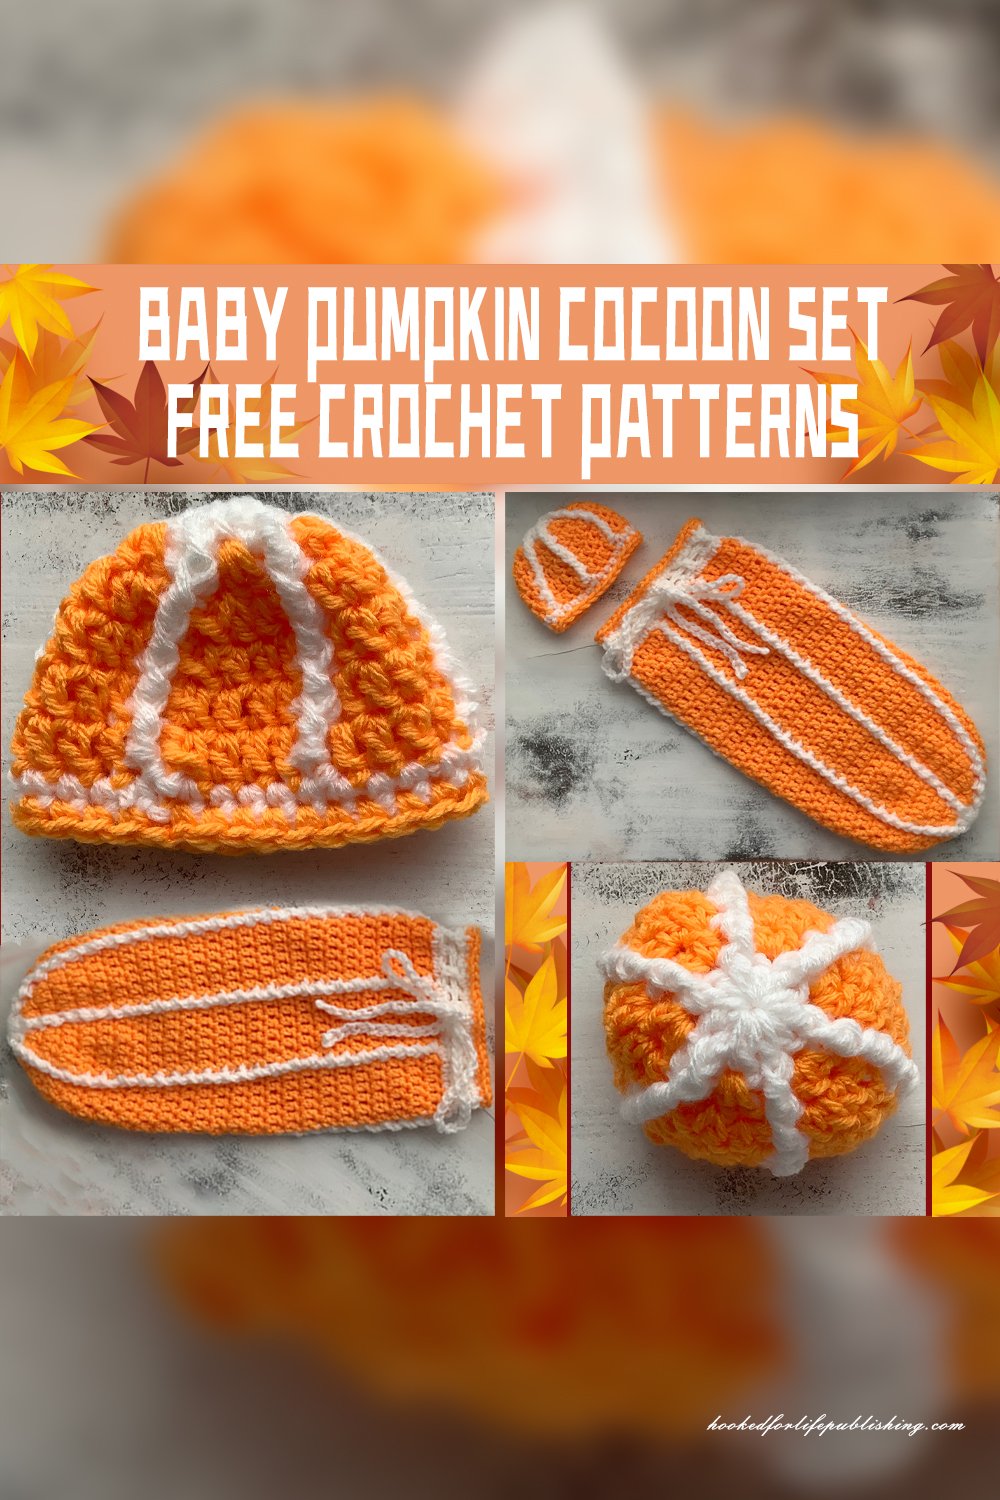 Baby Pumpkin Cocoon Set Crochet Patterns - FREE - iGOODideas.com